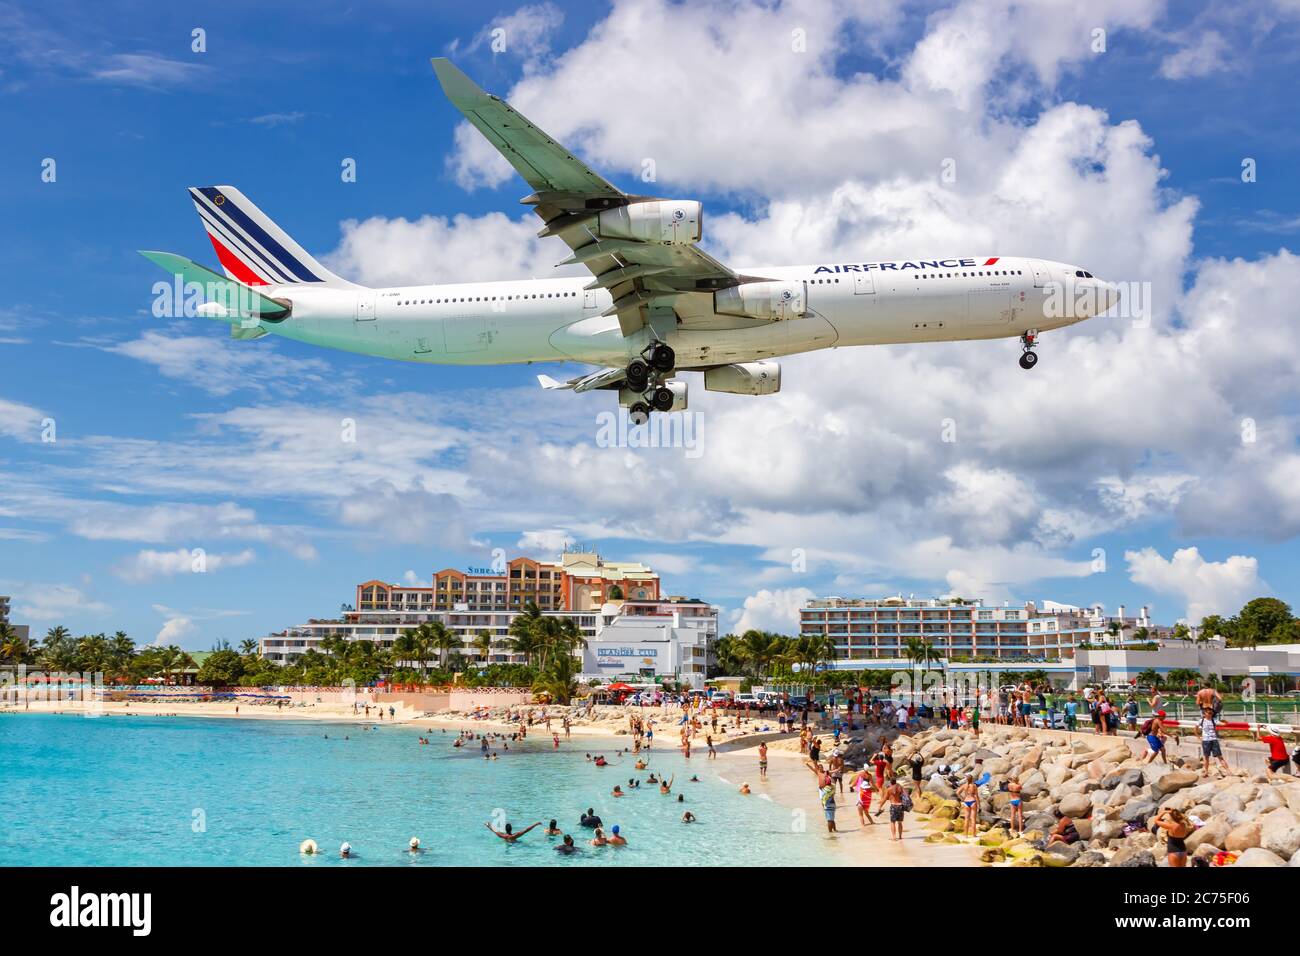 Sint Maarten - September 17, 2016: Air France Airbus A340-300 airplane at Sint Maarten airport (SXM) in the Caribbean. Airbus is a European aircraft m Stock Photo